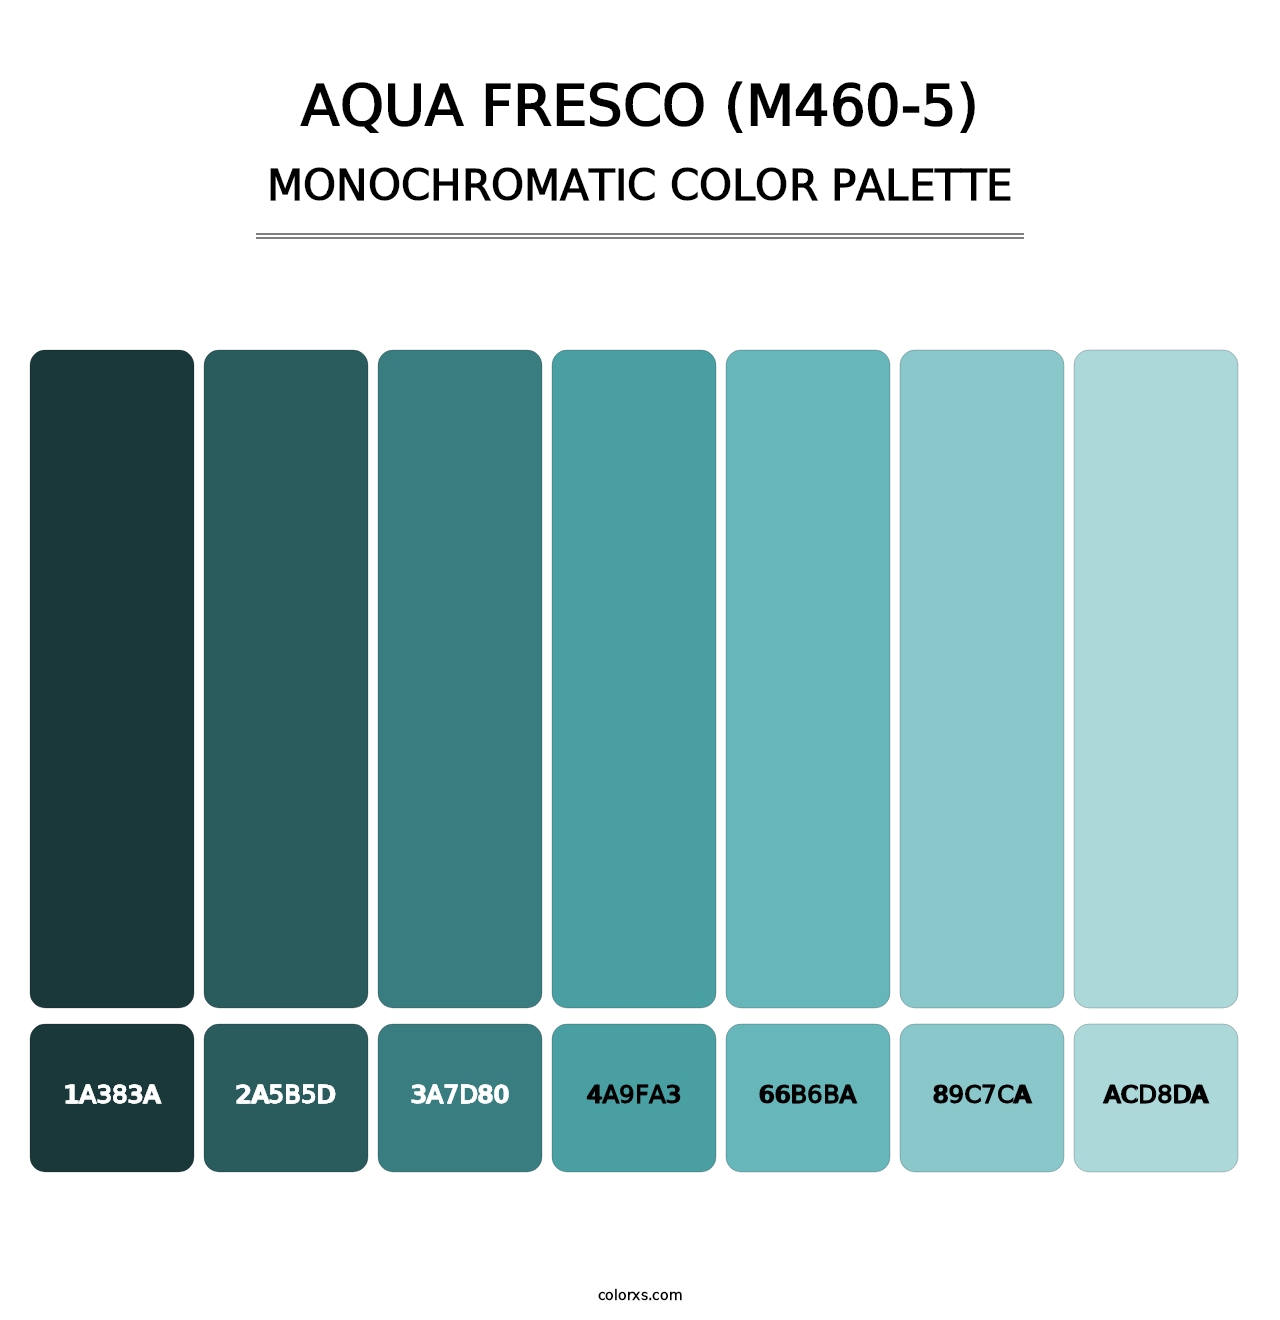 Aqua Fresco (M460-5) - Monochromatic Color Palette